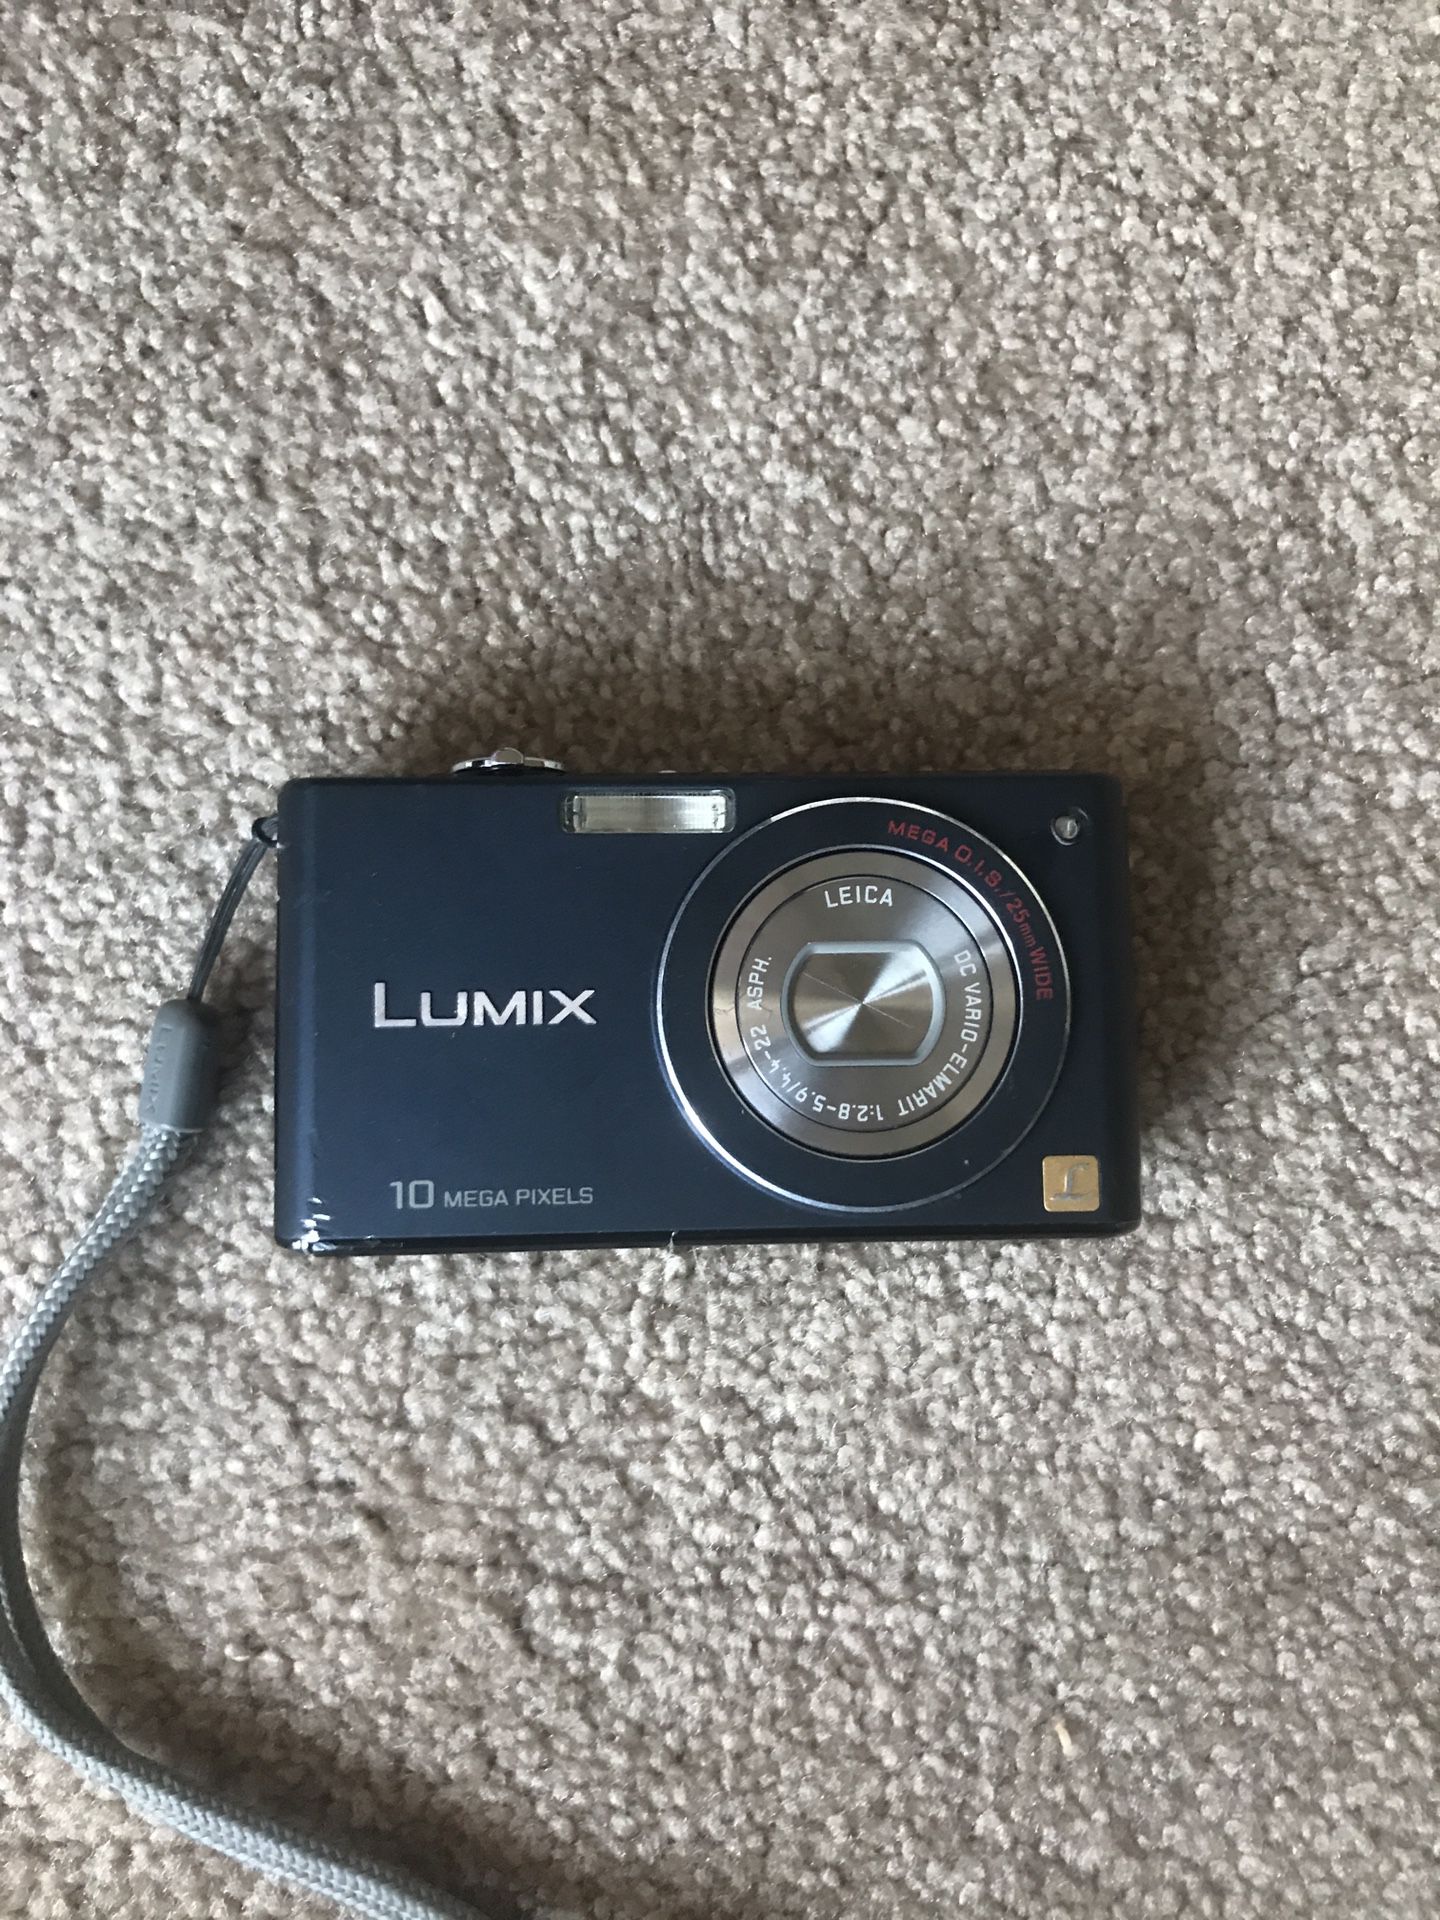 LUMIX camera with case